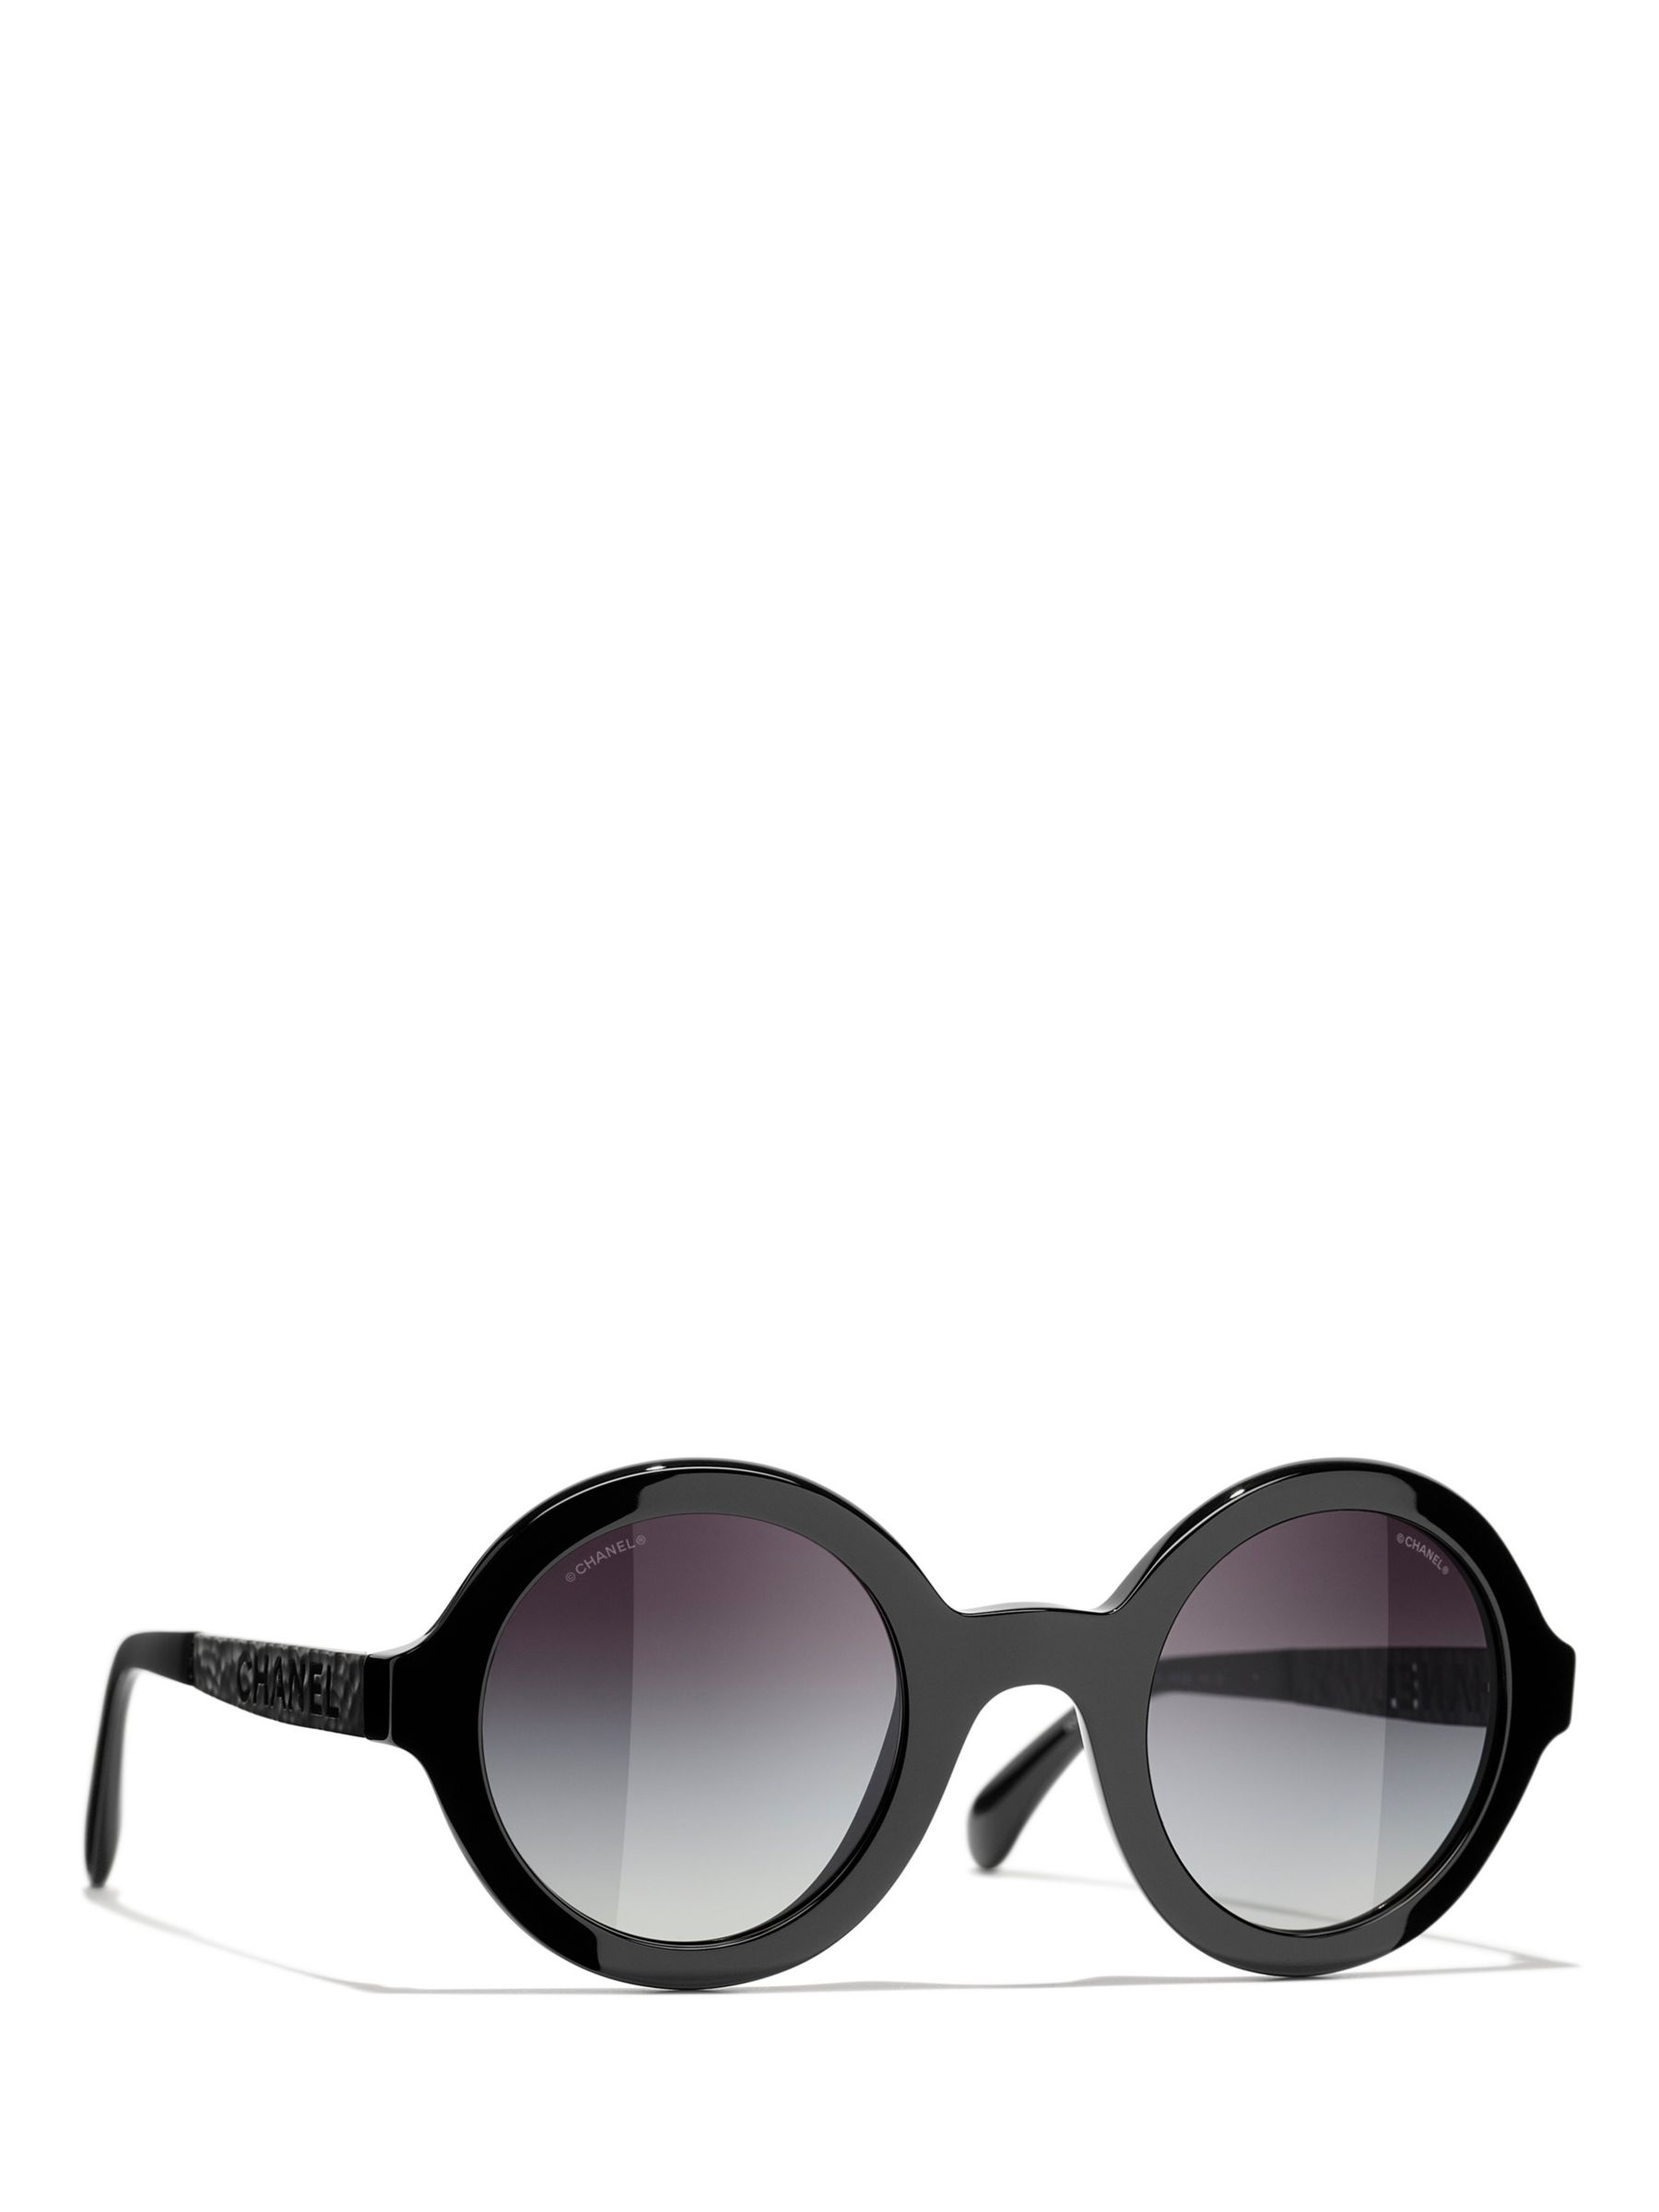 Vintage Chanel Sunglasses -  UK